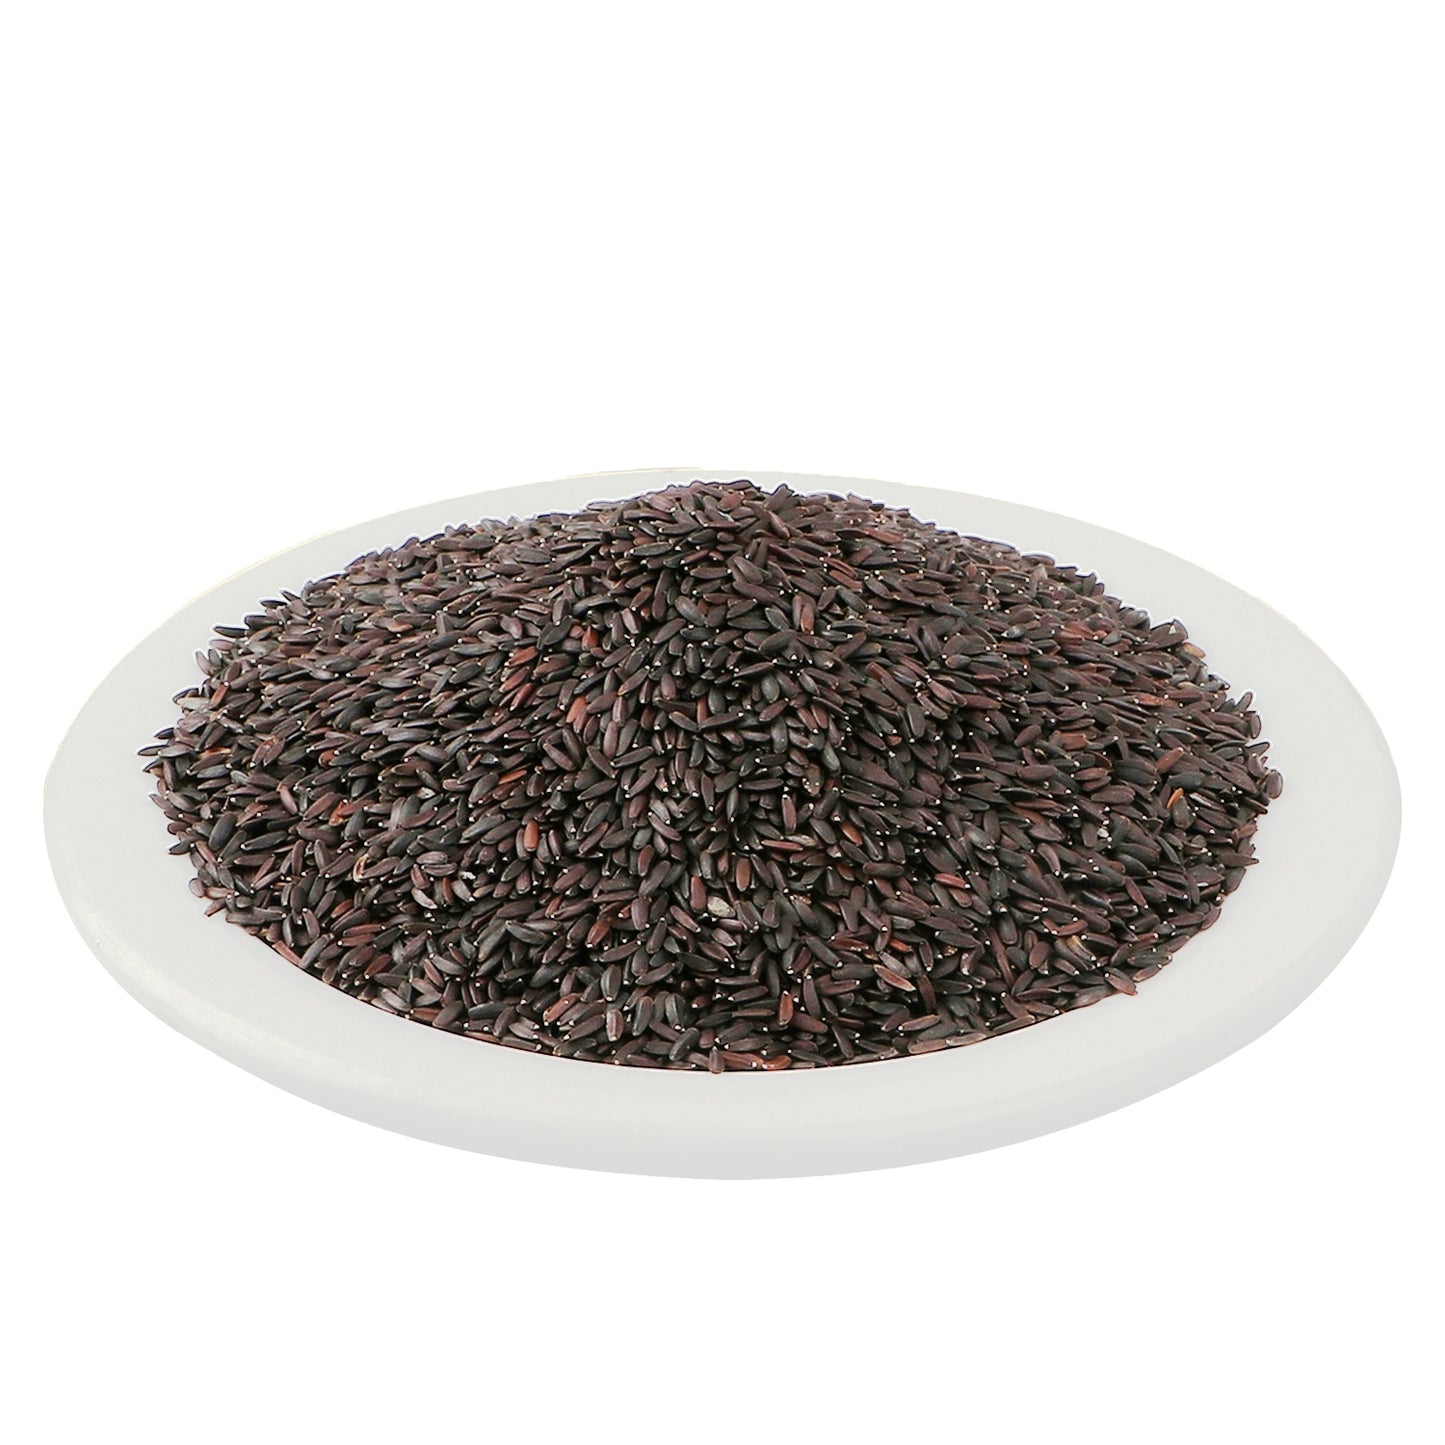 Chia Seeds - Omega 3 - Anti Oxidant - Gluten Free - Salvia Hispanica